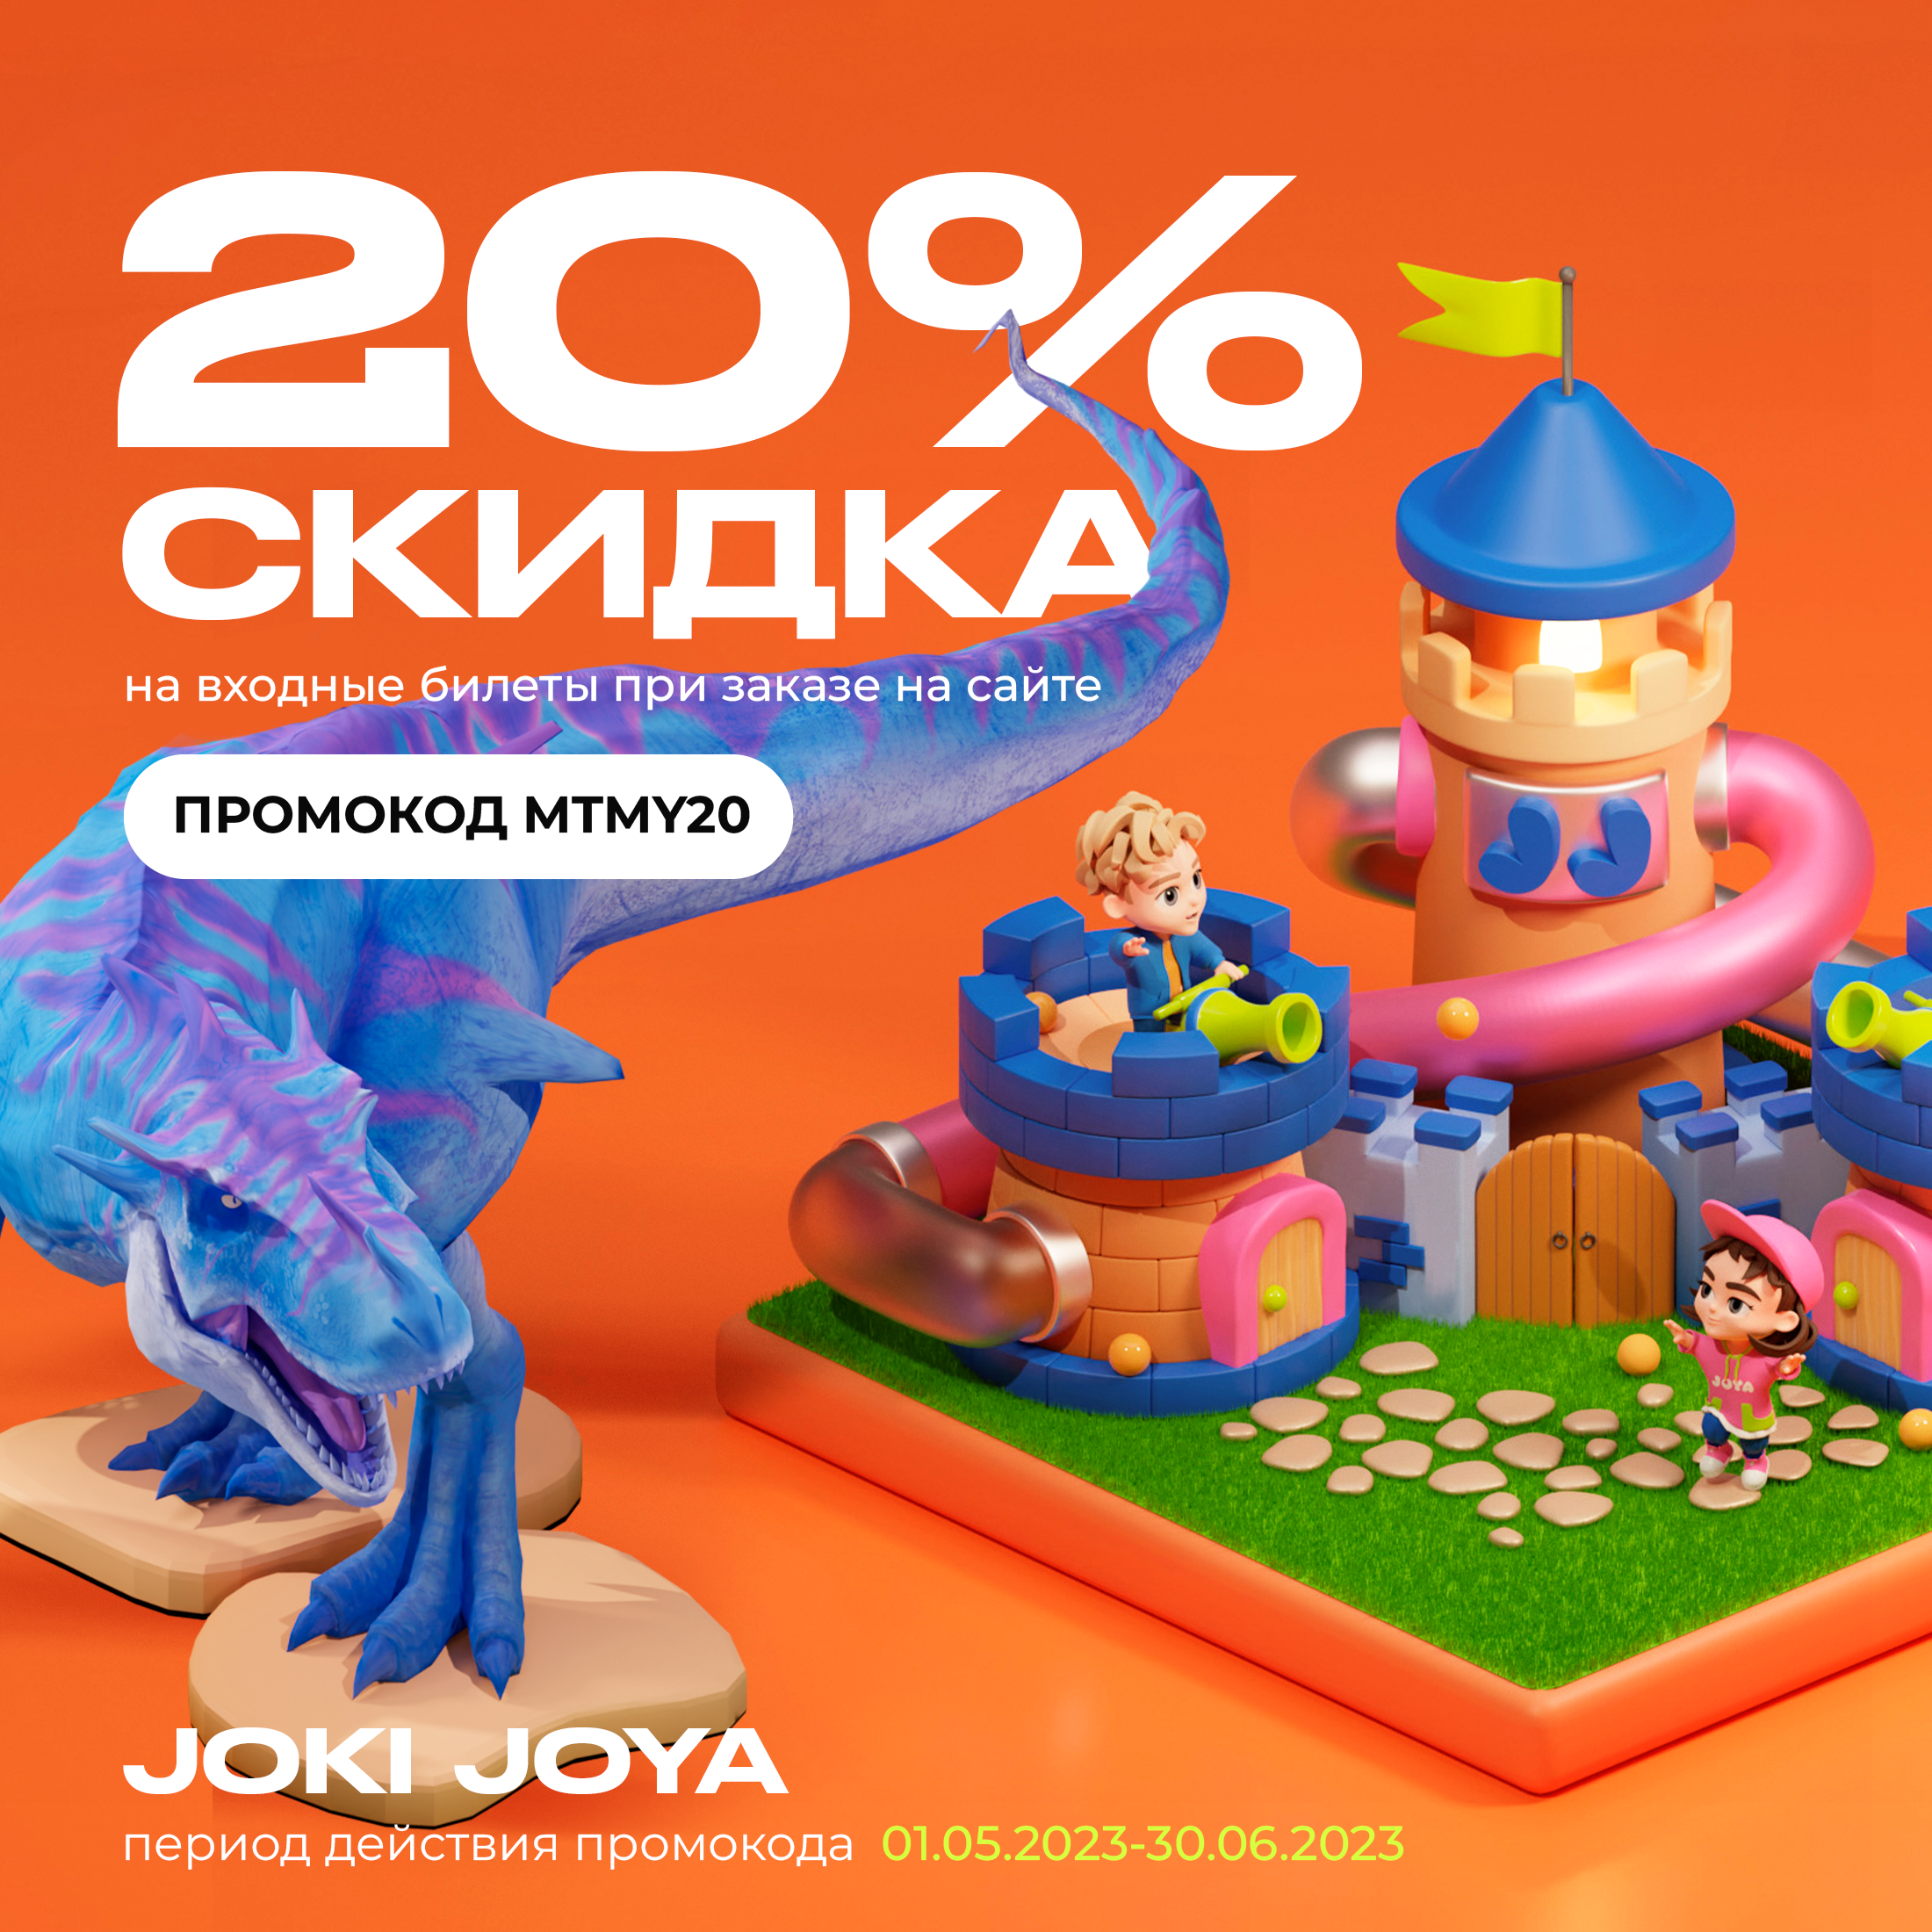 Скидка 20% на билеты в парки развлечений Joki Joya по промокоду MTMY20